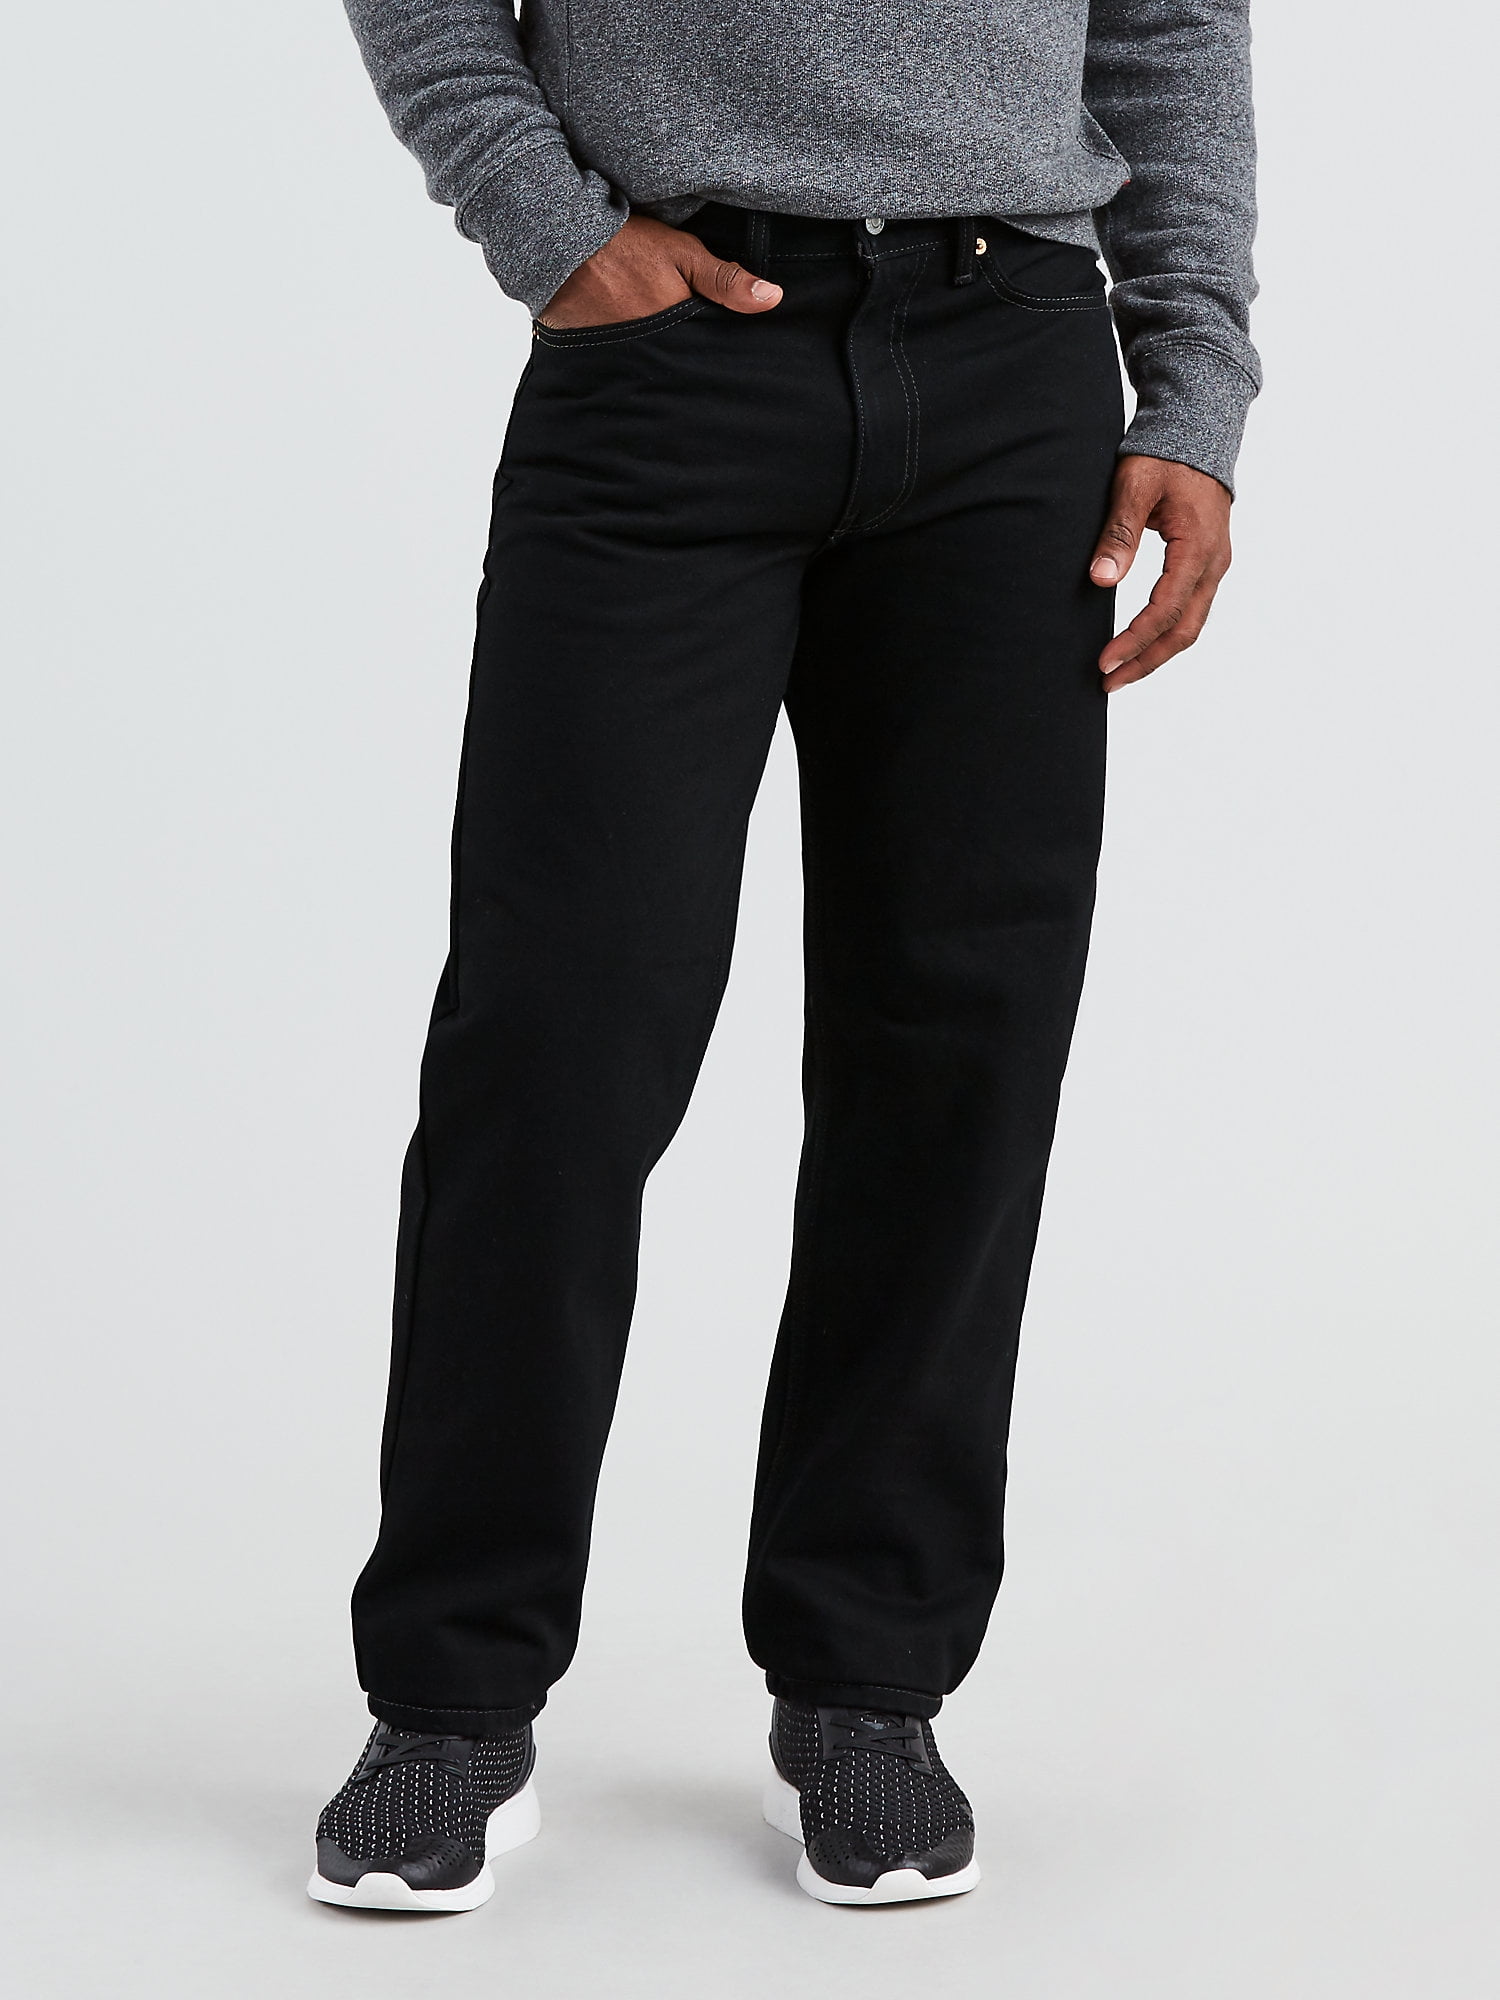 æg Wedge makker Levi's Men's 550 Relaxed Fit Jeans - Walmart.com